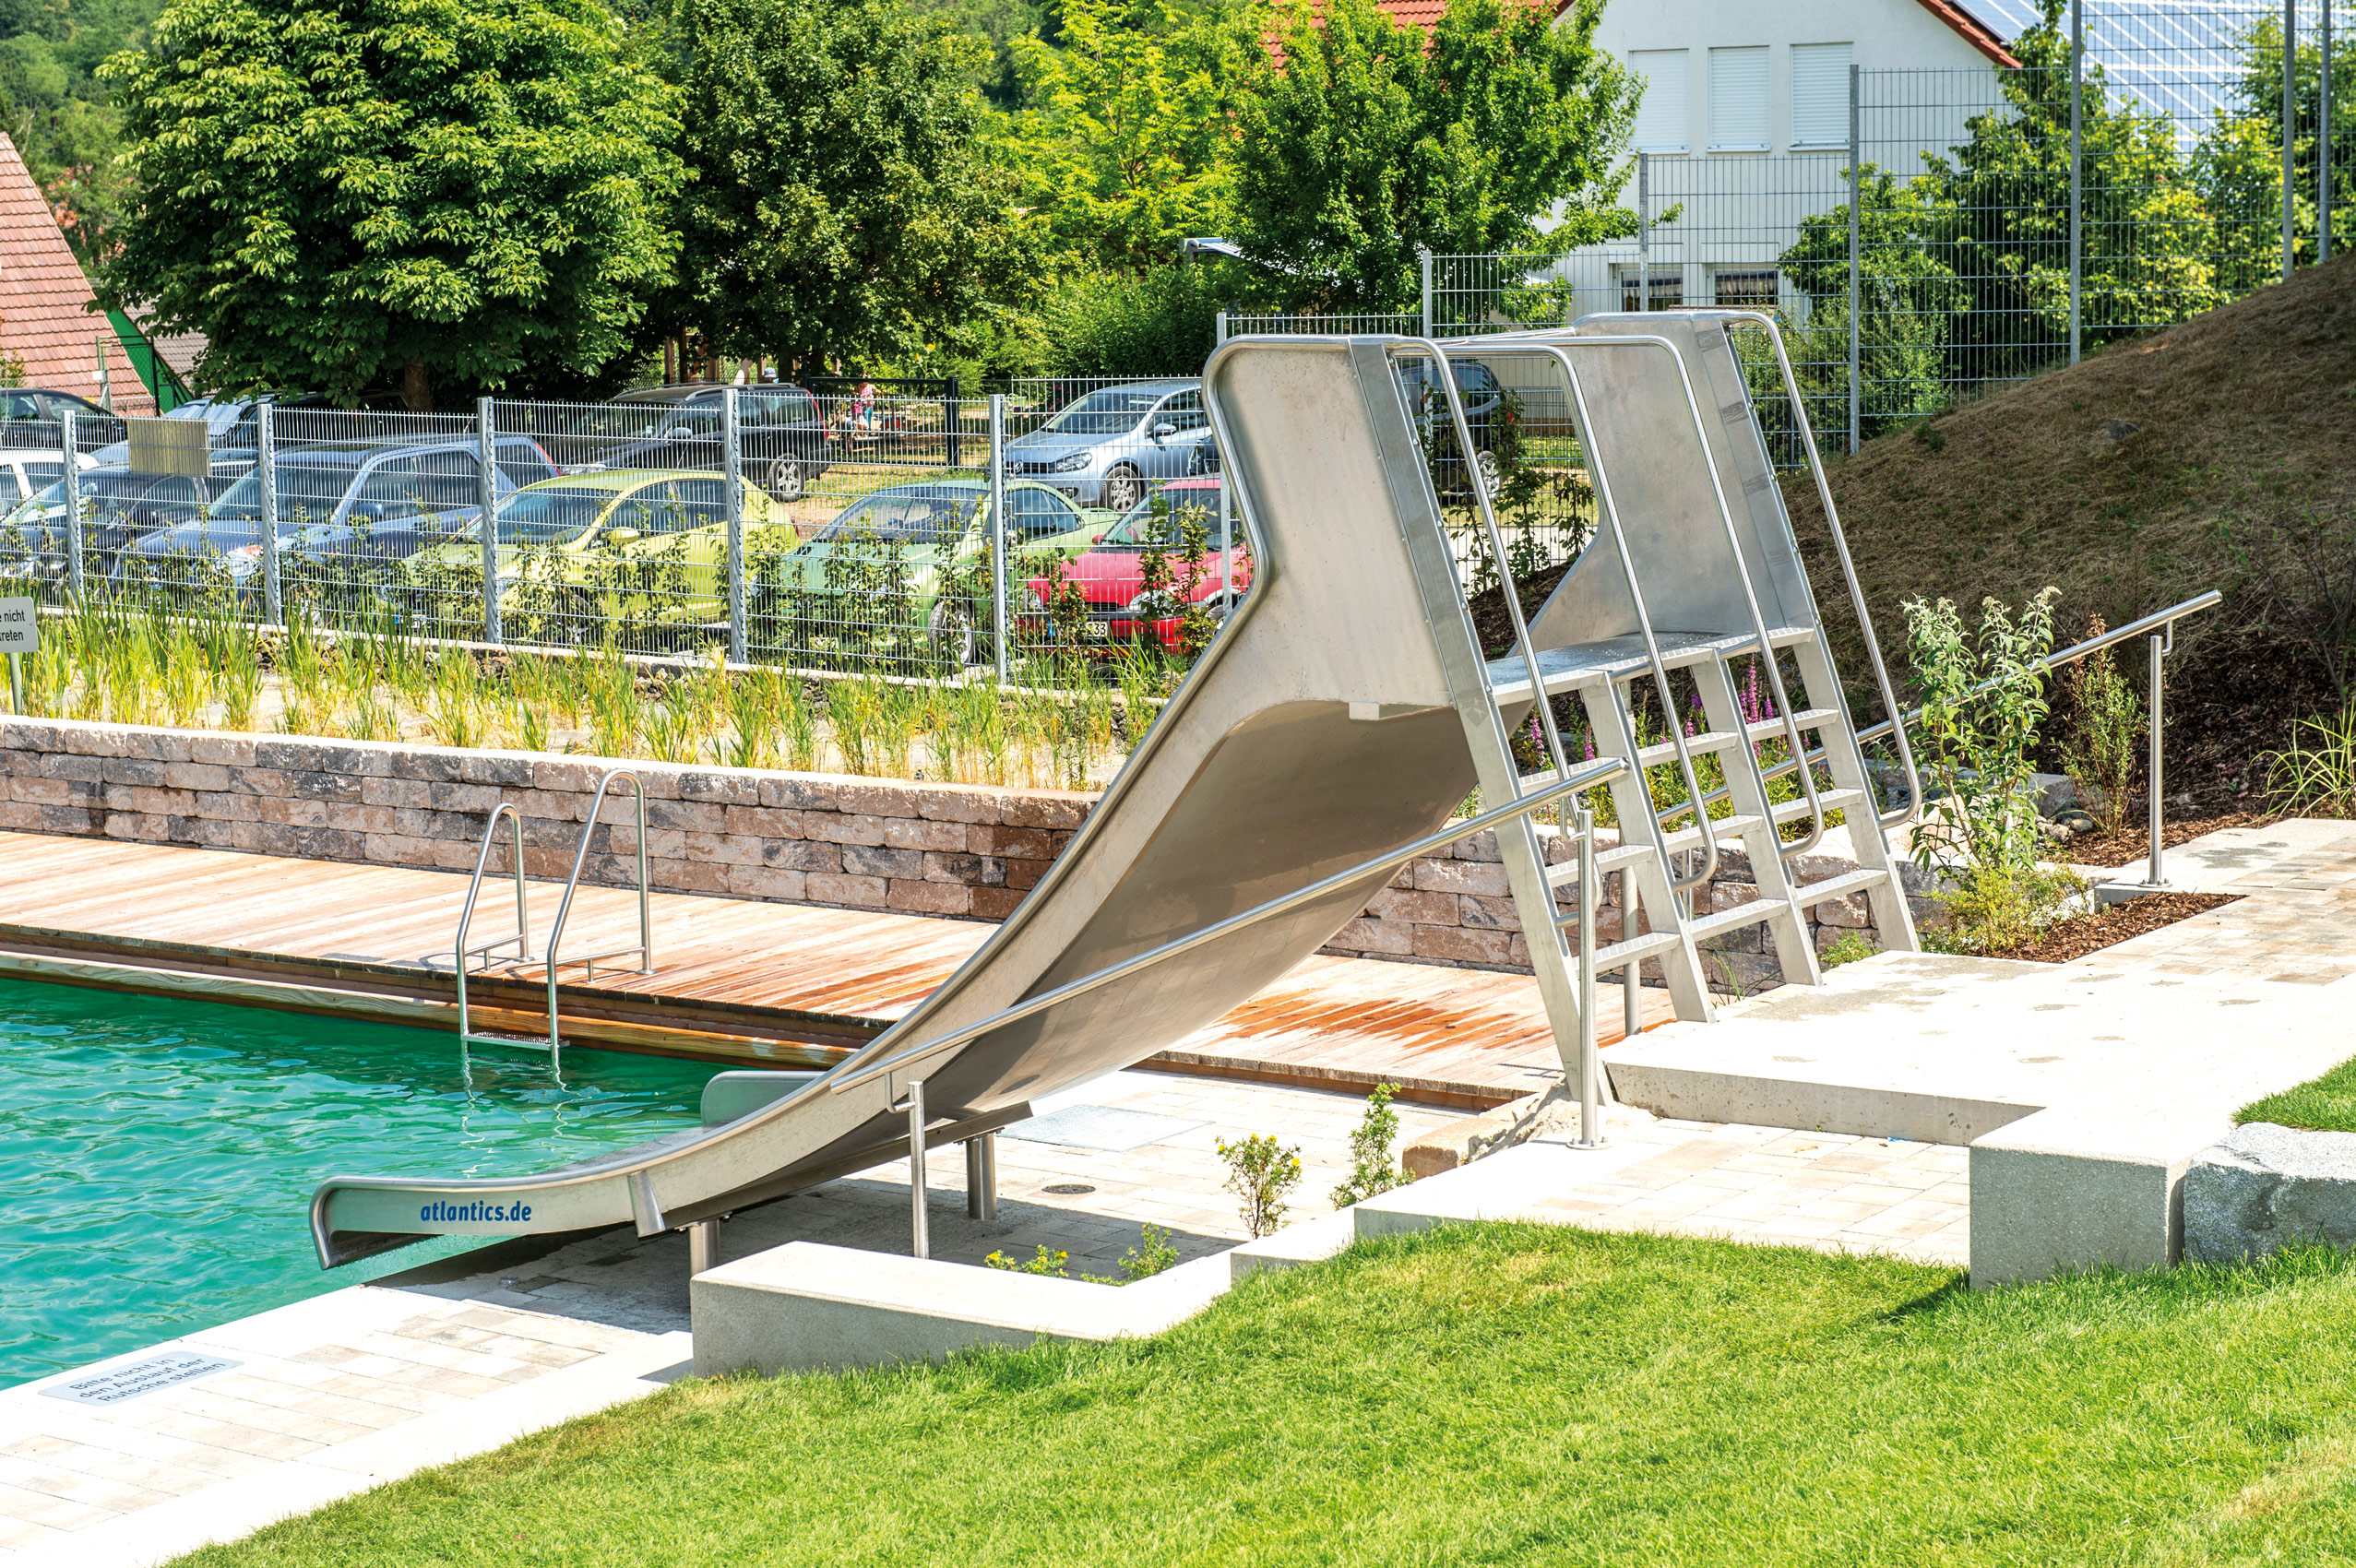 atlantics stainless steel slides open air swimming pool aura euervillage bayern boxwater pool 137517